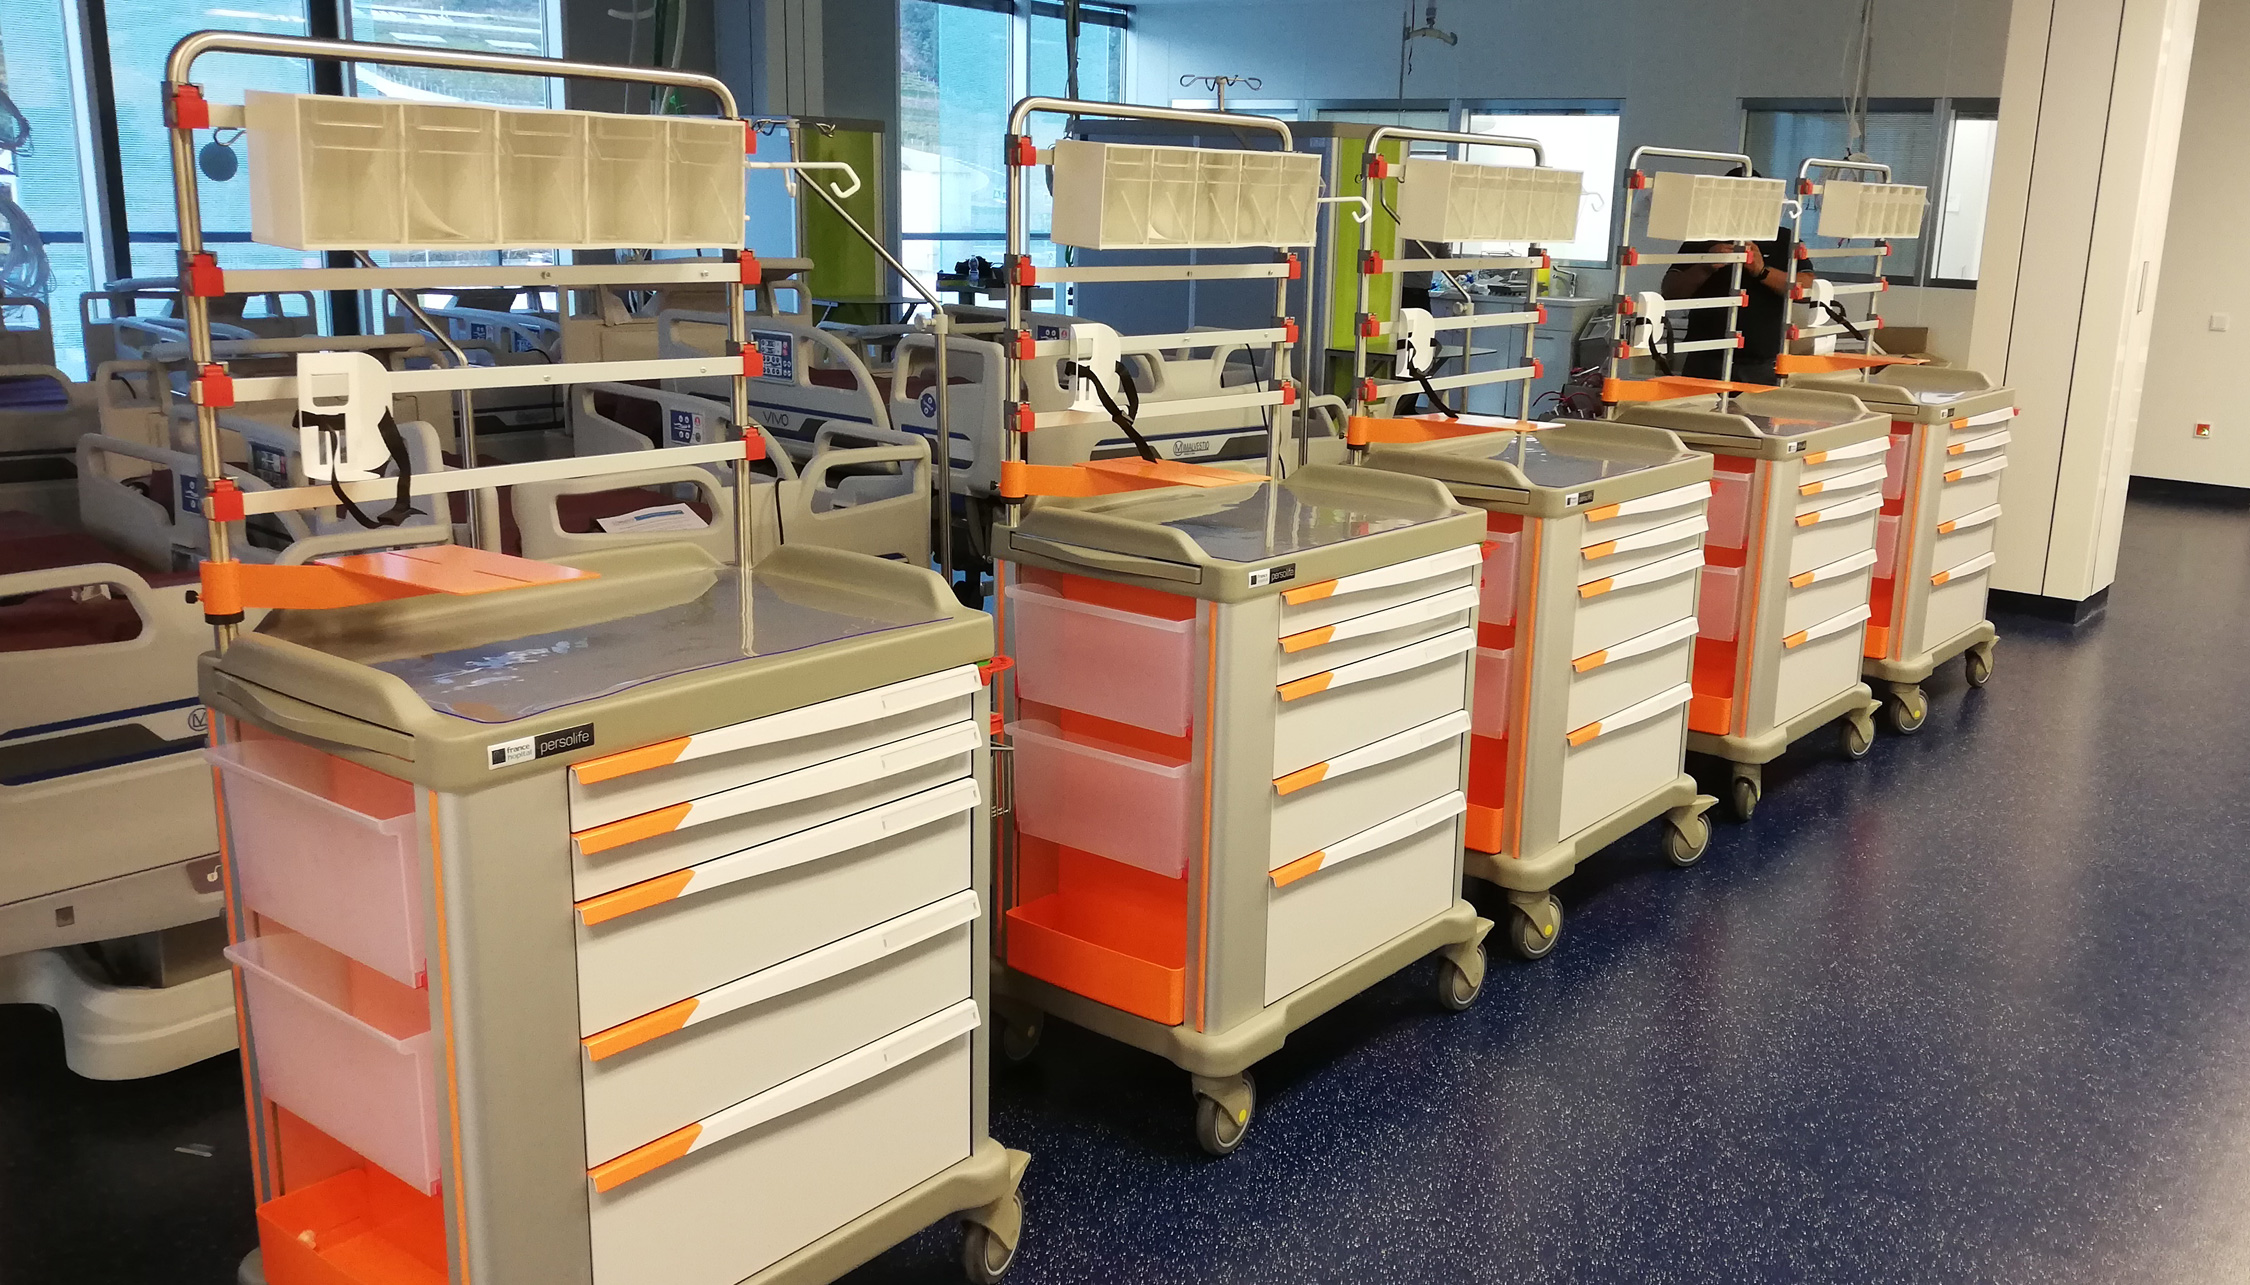 Freshly delivered PERSOLIFE emergency trolleys during final preparation before entering service